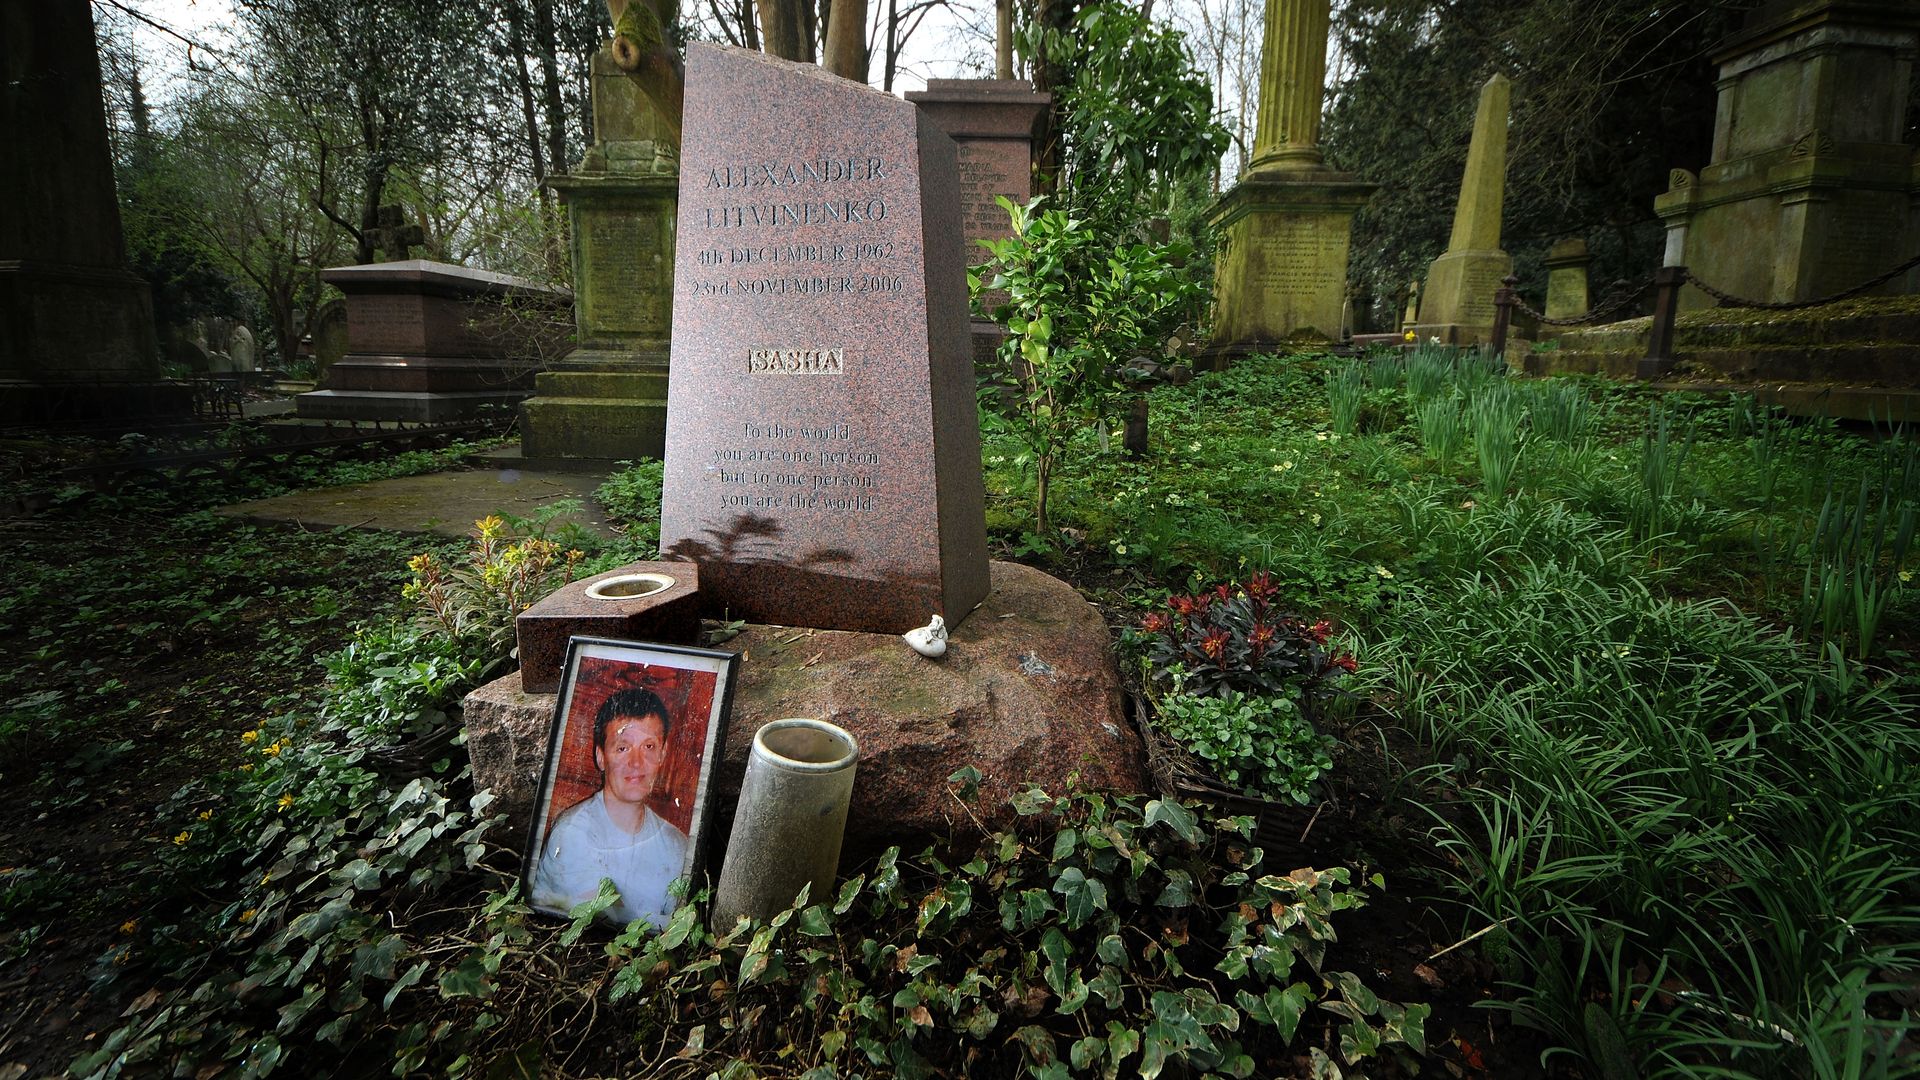  The grave of Alexander Litvinenko at Highgate Cemetery  in London, England.